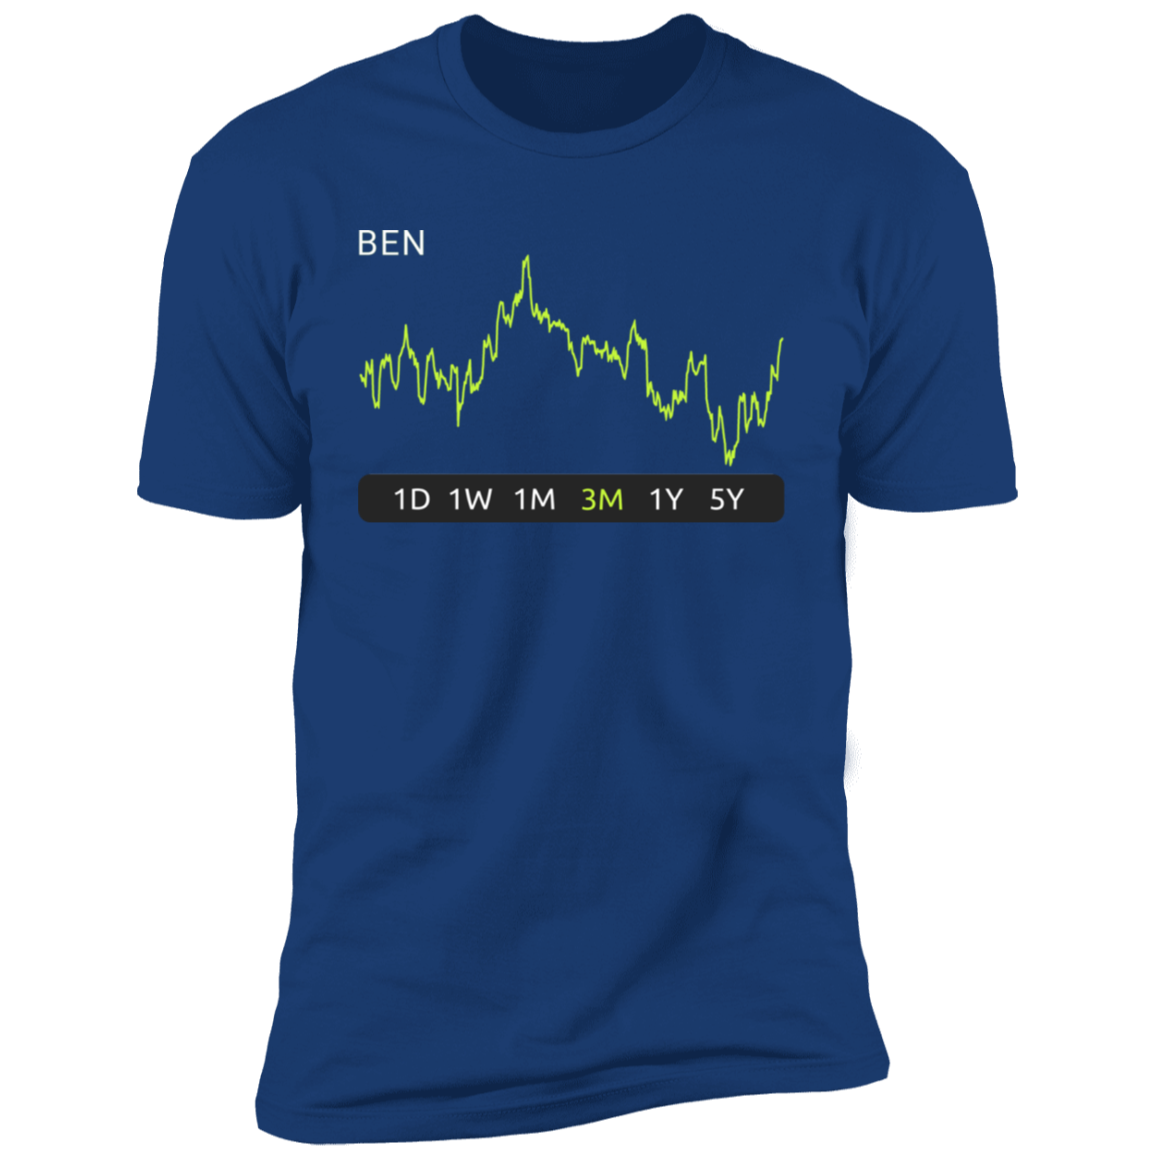 BEN Stock 3m Premium T-Shirt